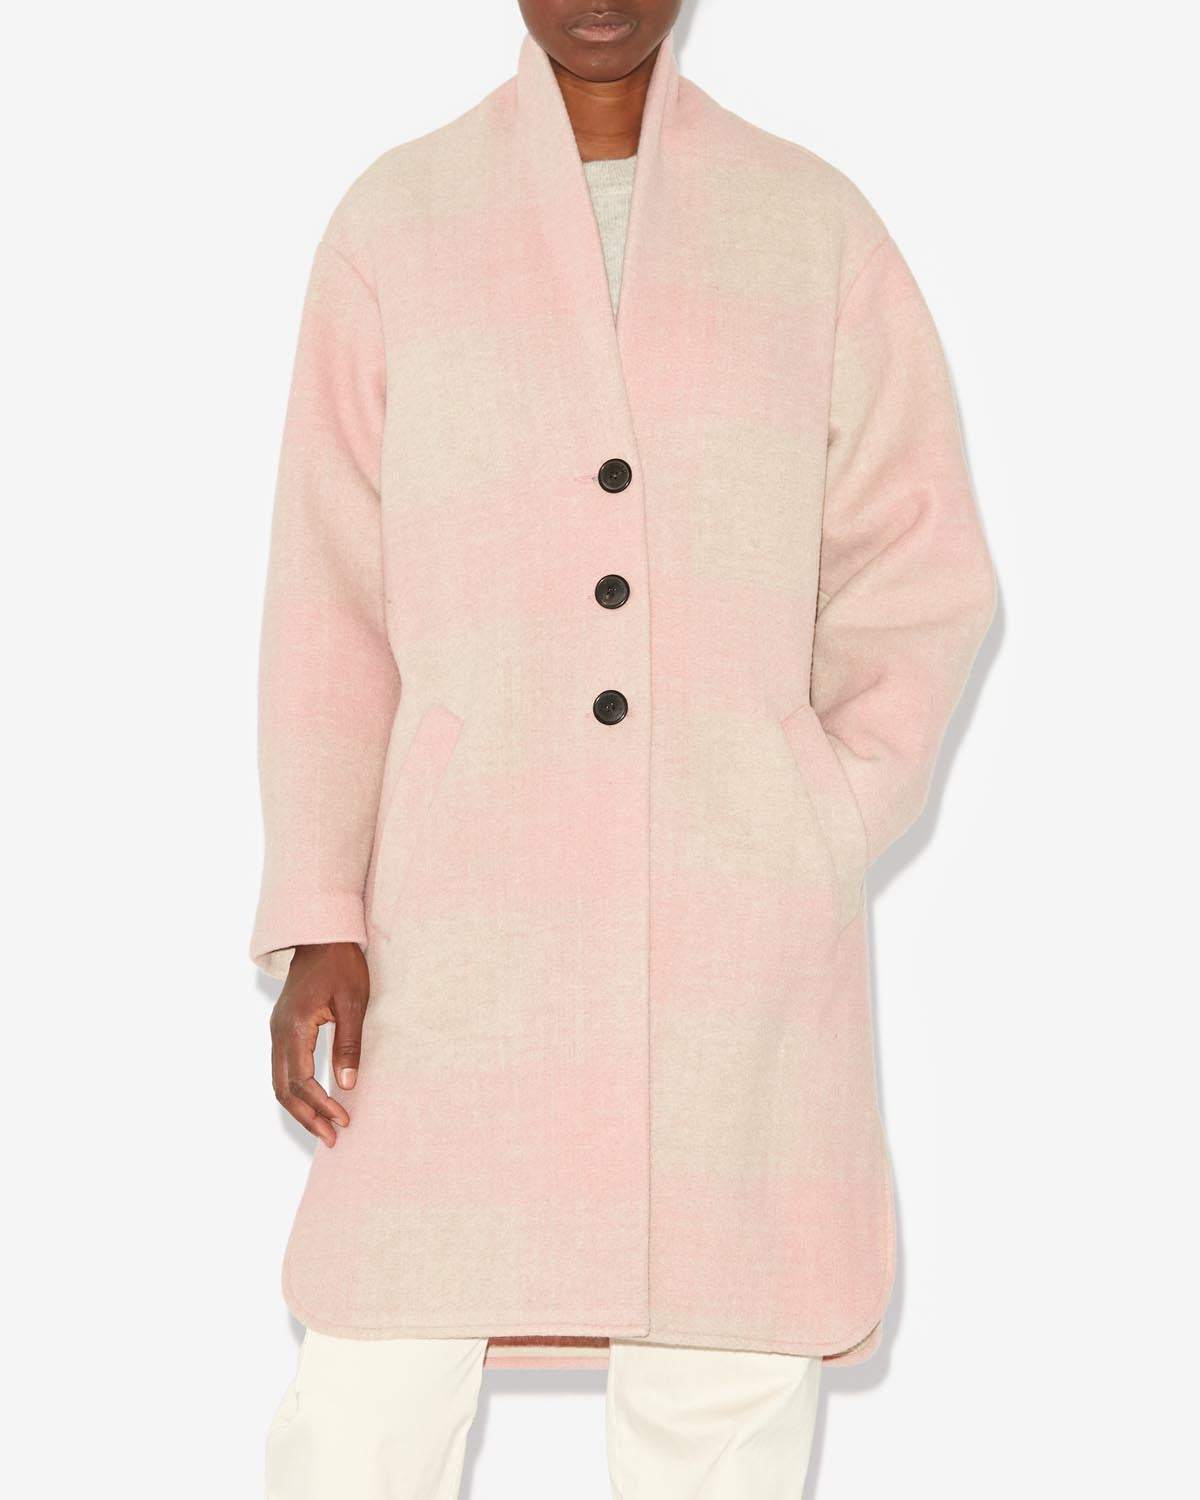 Gabriel cappotto Woman Light pink 4